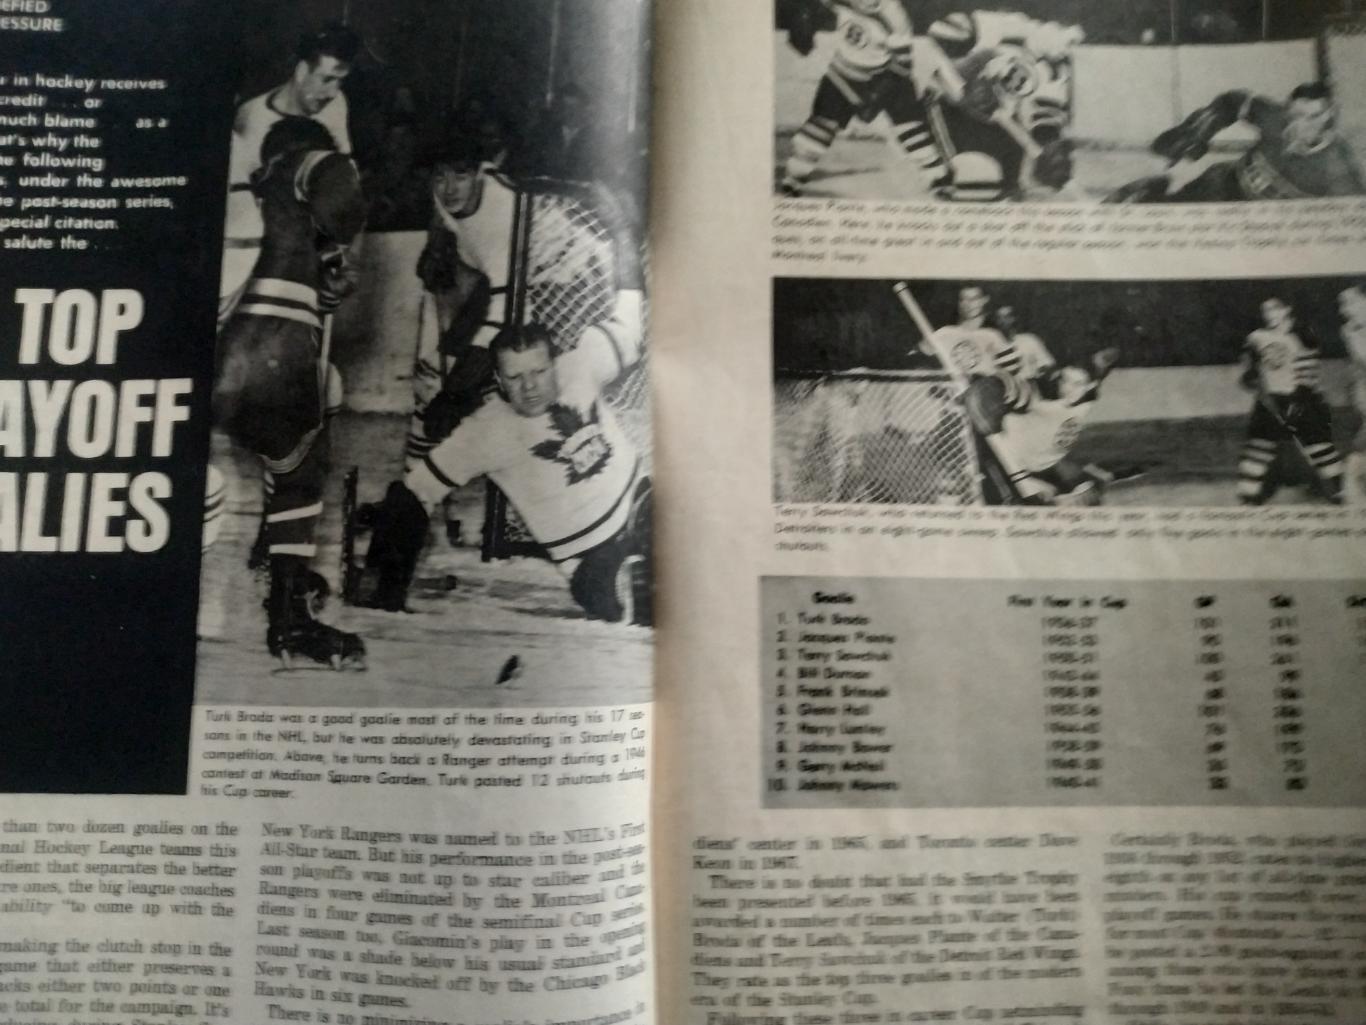 ЖУРНАЛ НХЛ СПОРТ СПЕШИАЛ ХОККЕЙ MAY 1969 NHL SPORTS SPECIAL HOCKEY 6